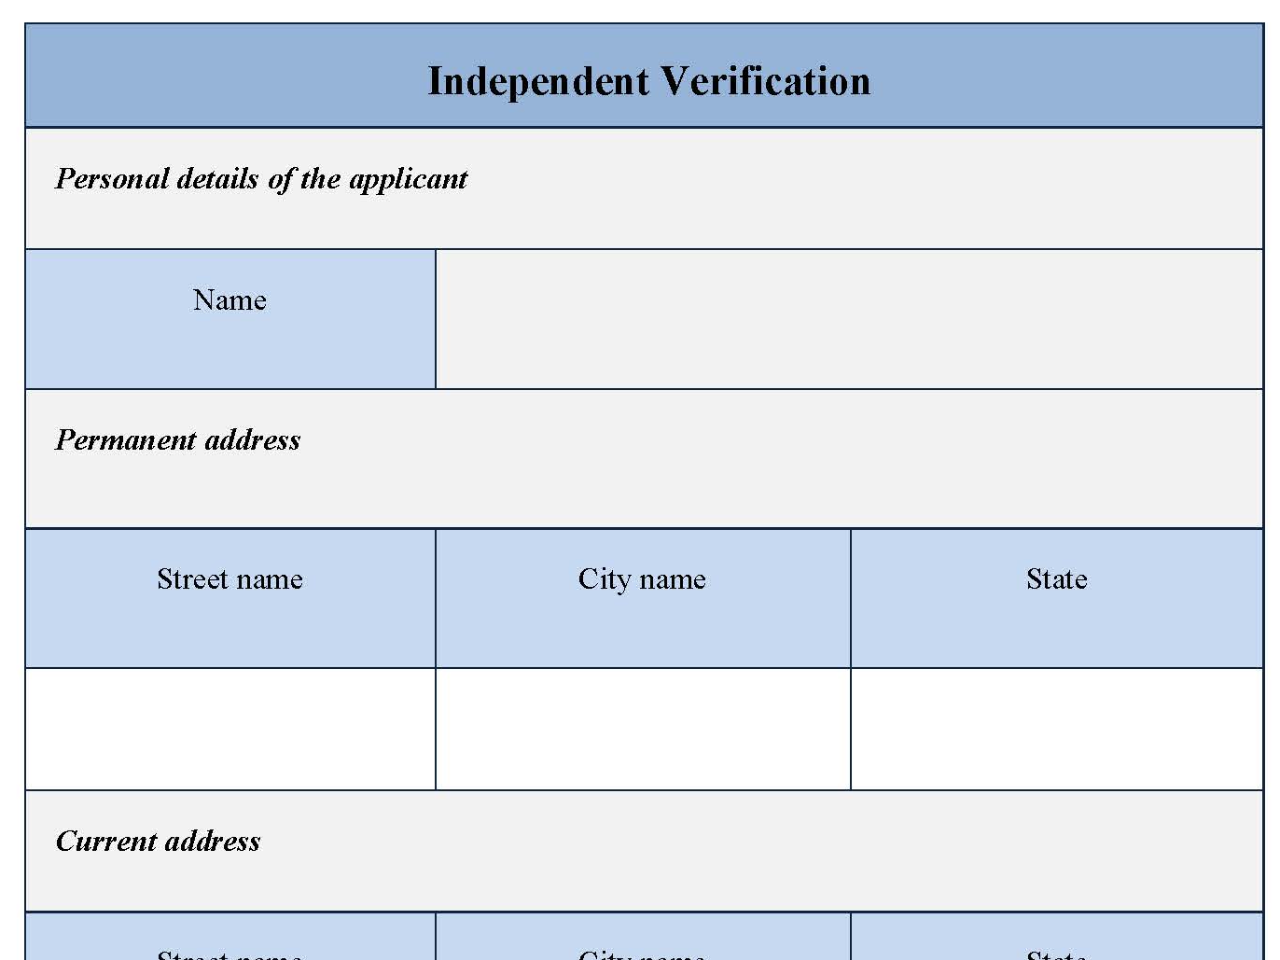 Independent Verification Form